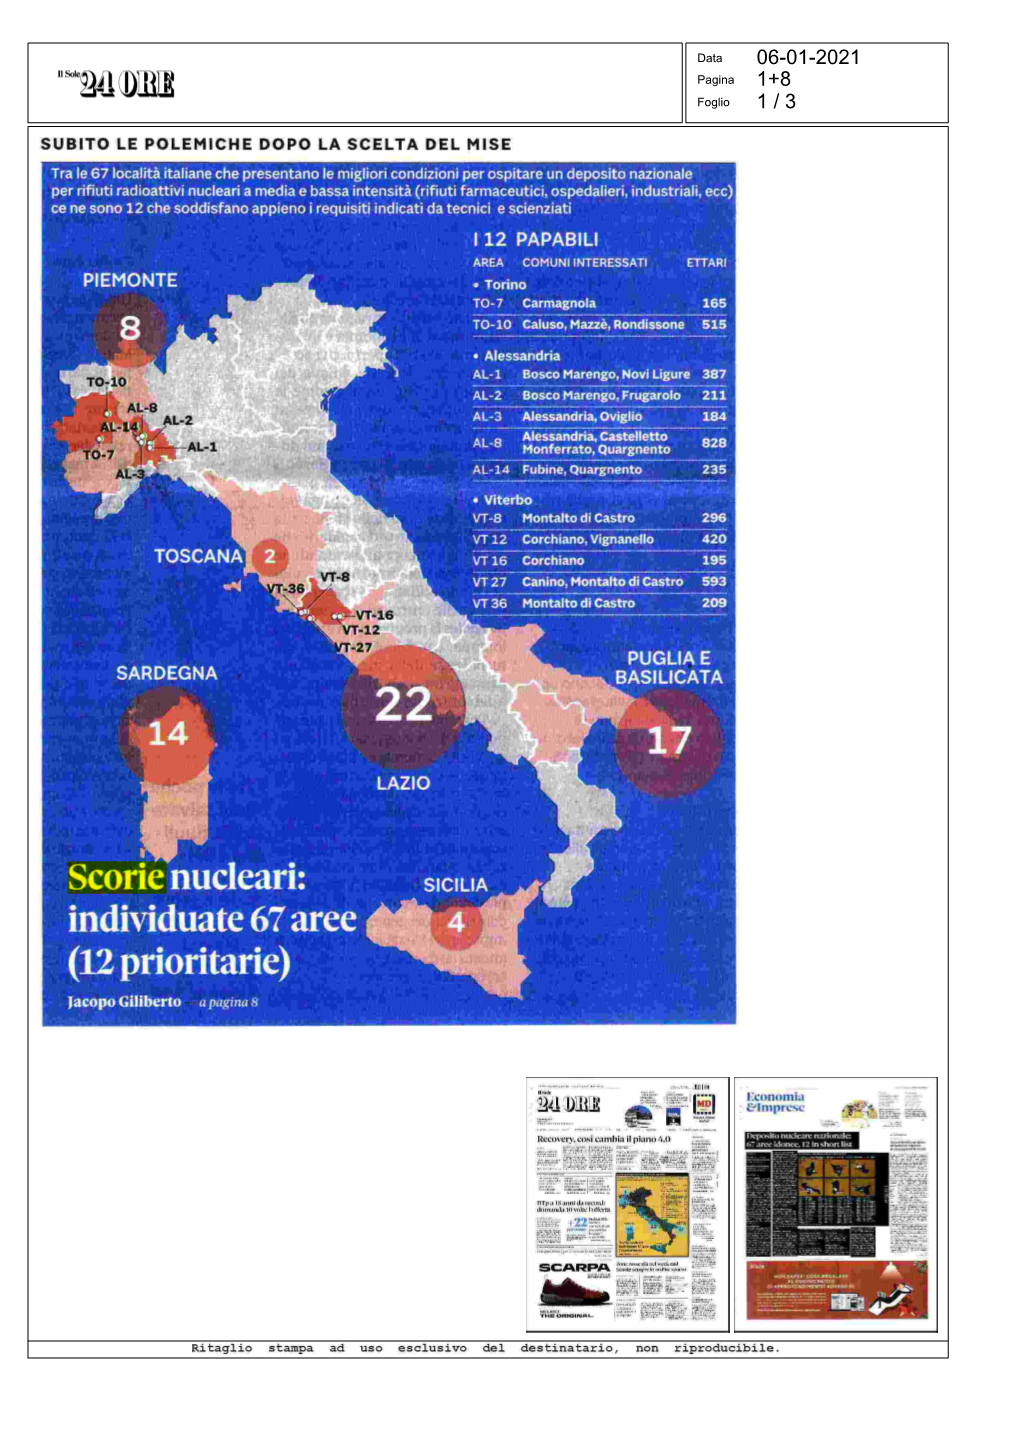 Scorie Nucleari: Individuate 67 Aree (12 Prioritarie)